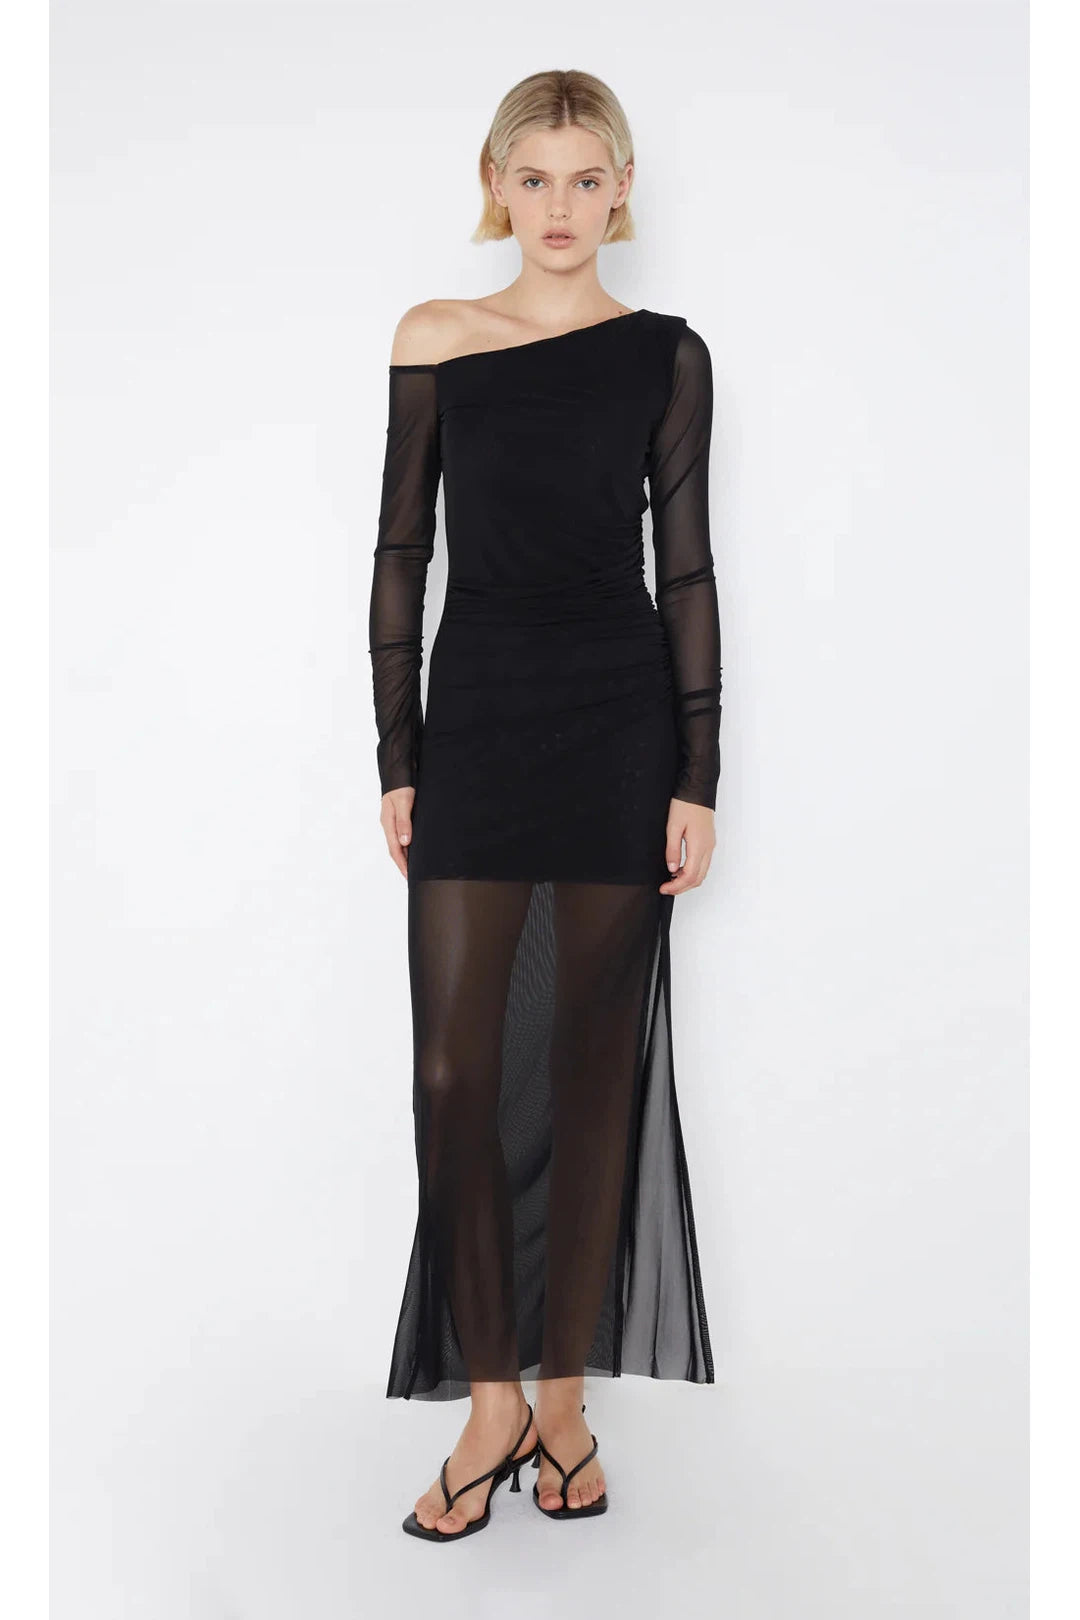 Fae Asym long sleeve dress, black